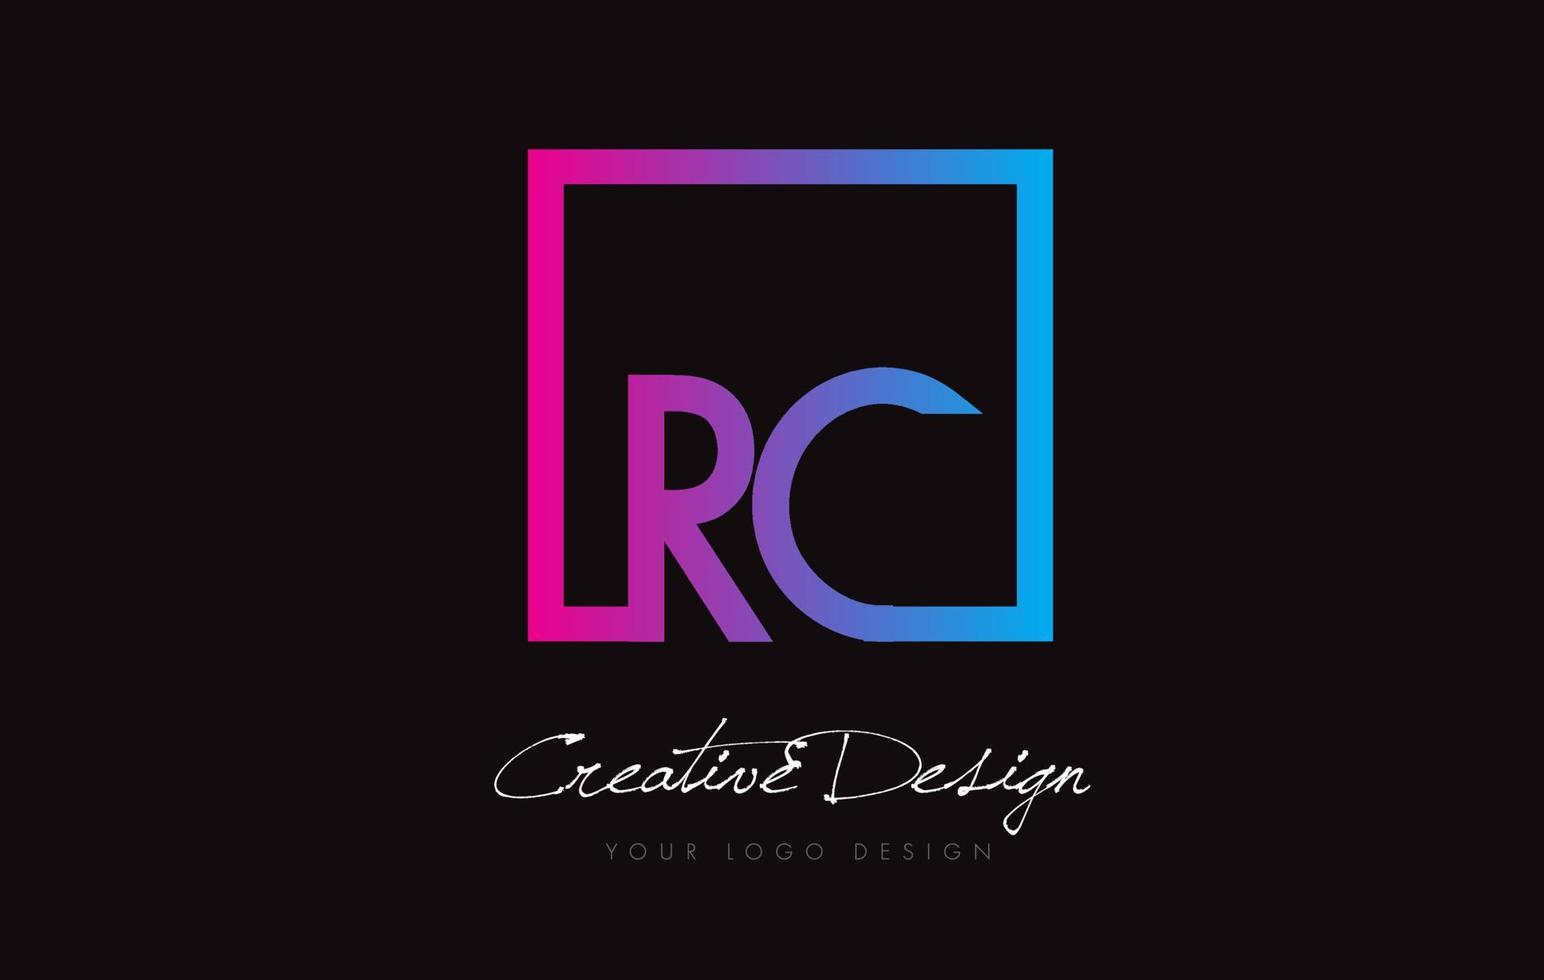 rc vierkante frame letter logo ontwerp met paars blauwe kleuren. vector